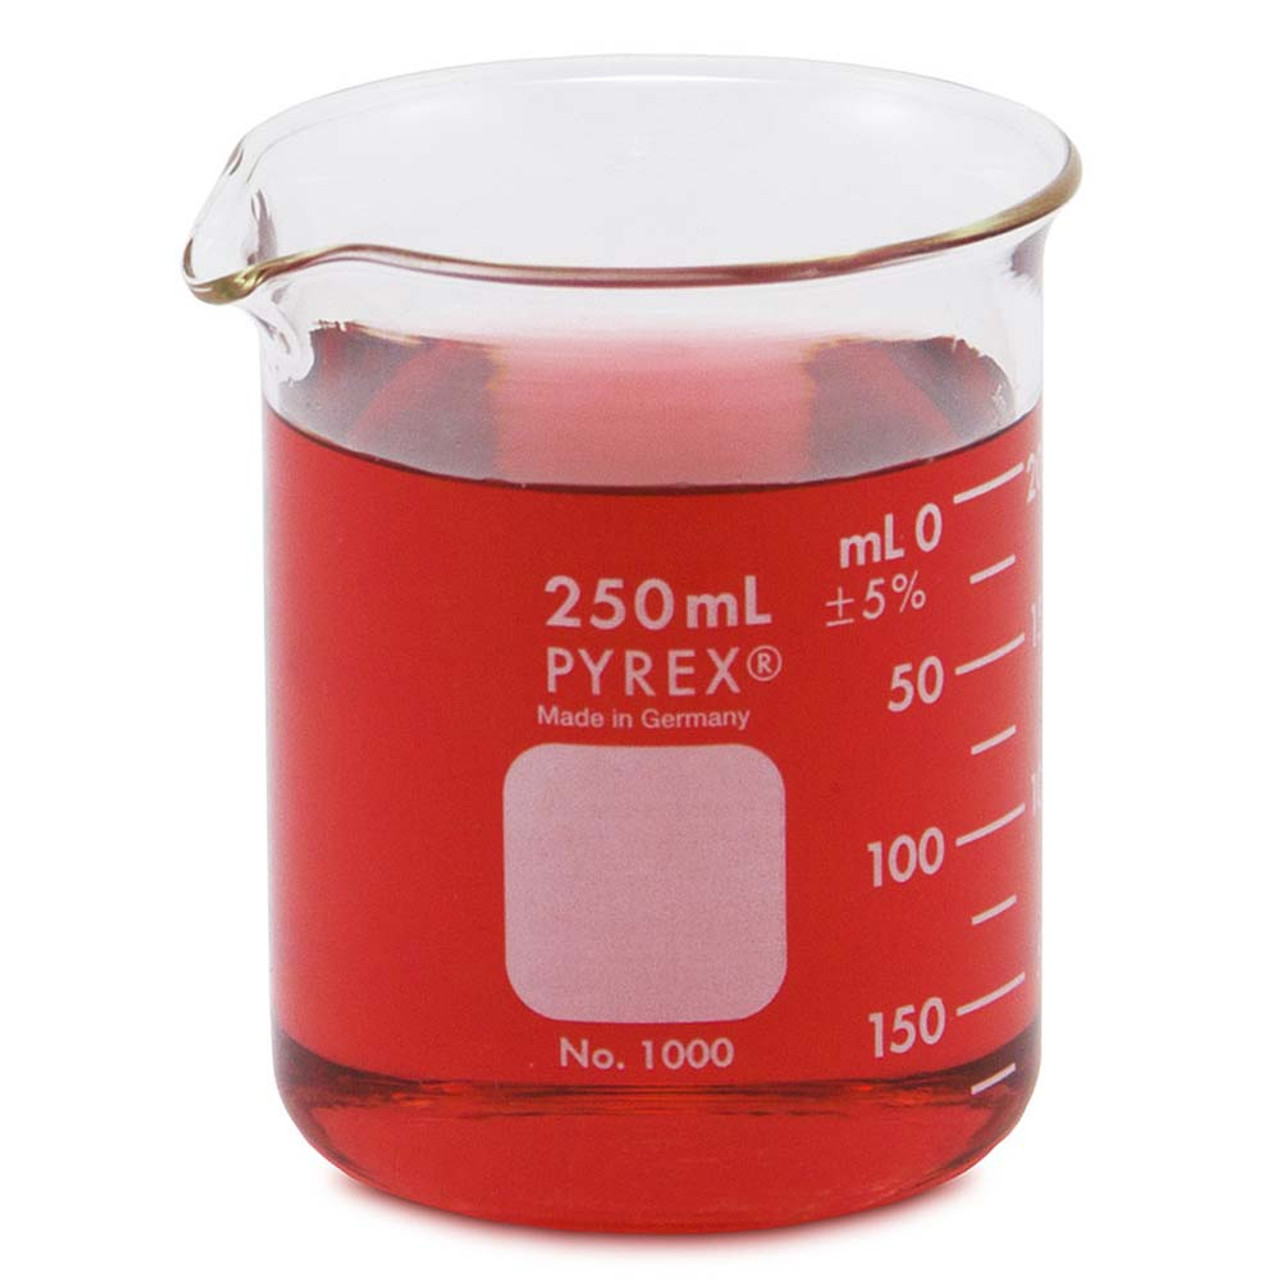 Measuring Beakers; Pyrex Glass, 150 ml, 12/Pack QS-29953 - Cleanroom World